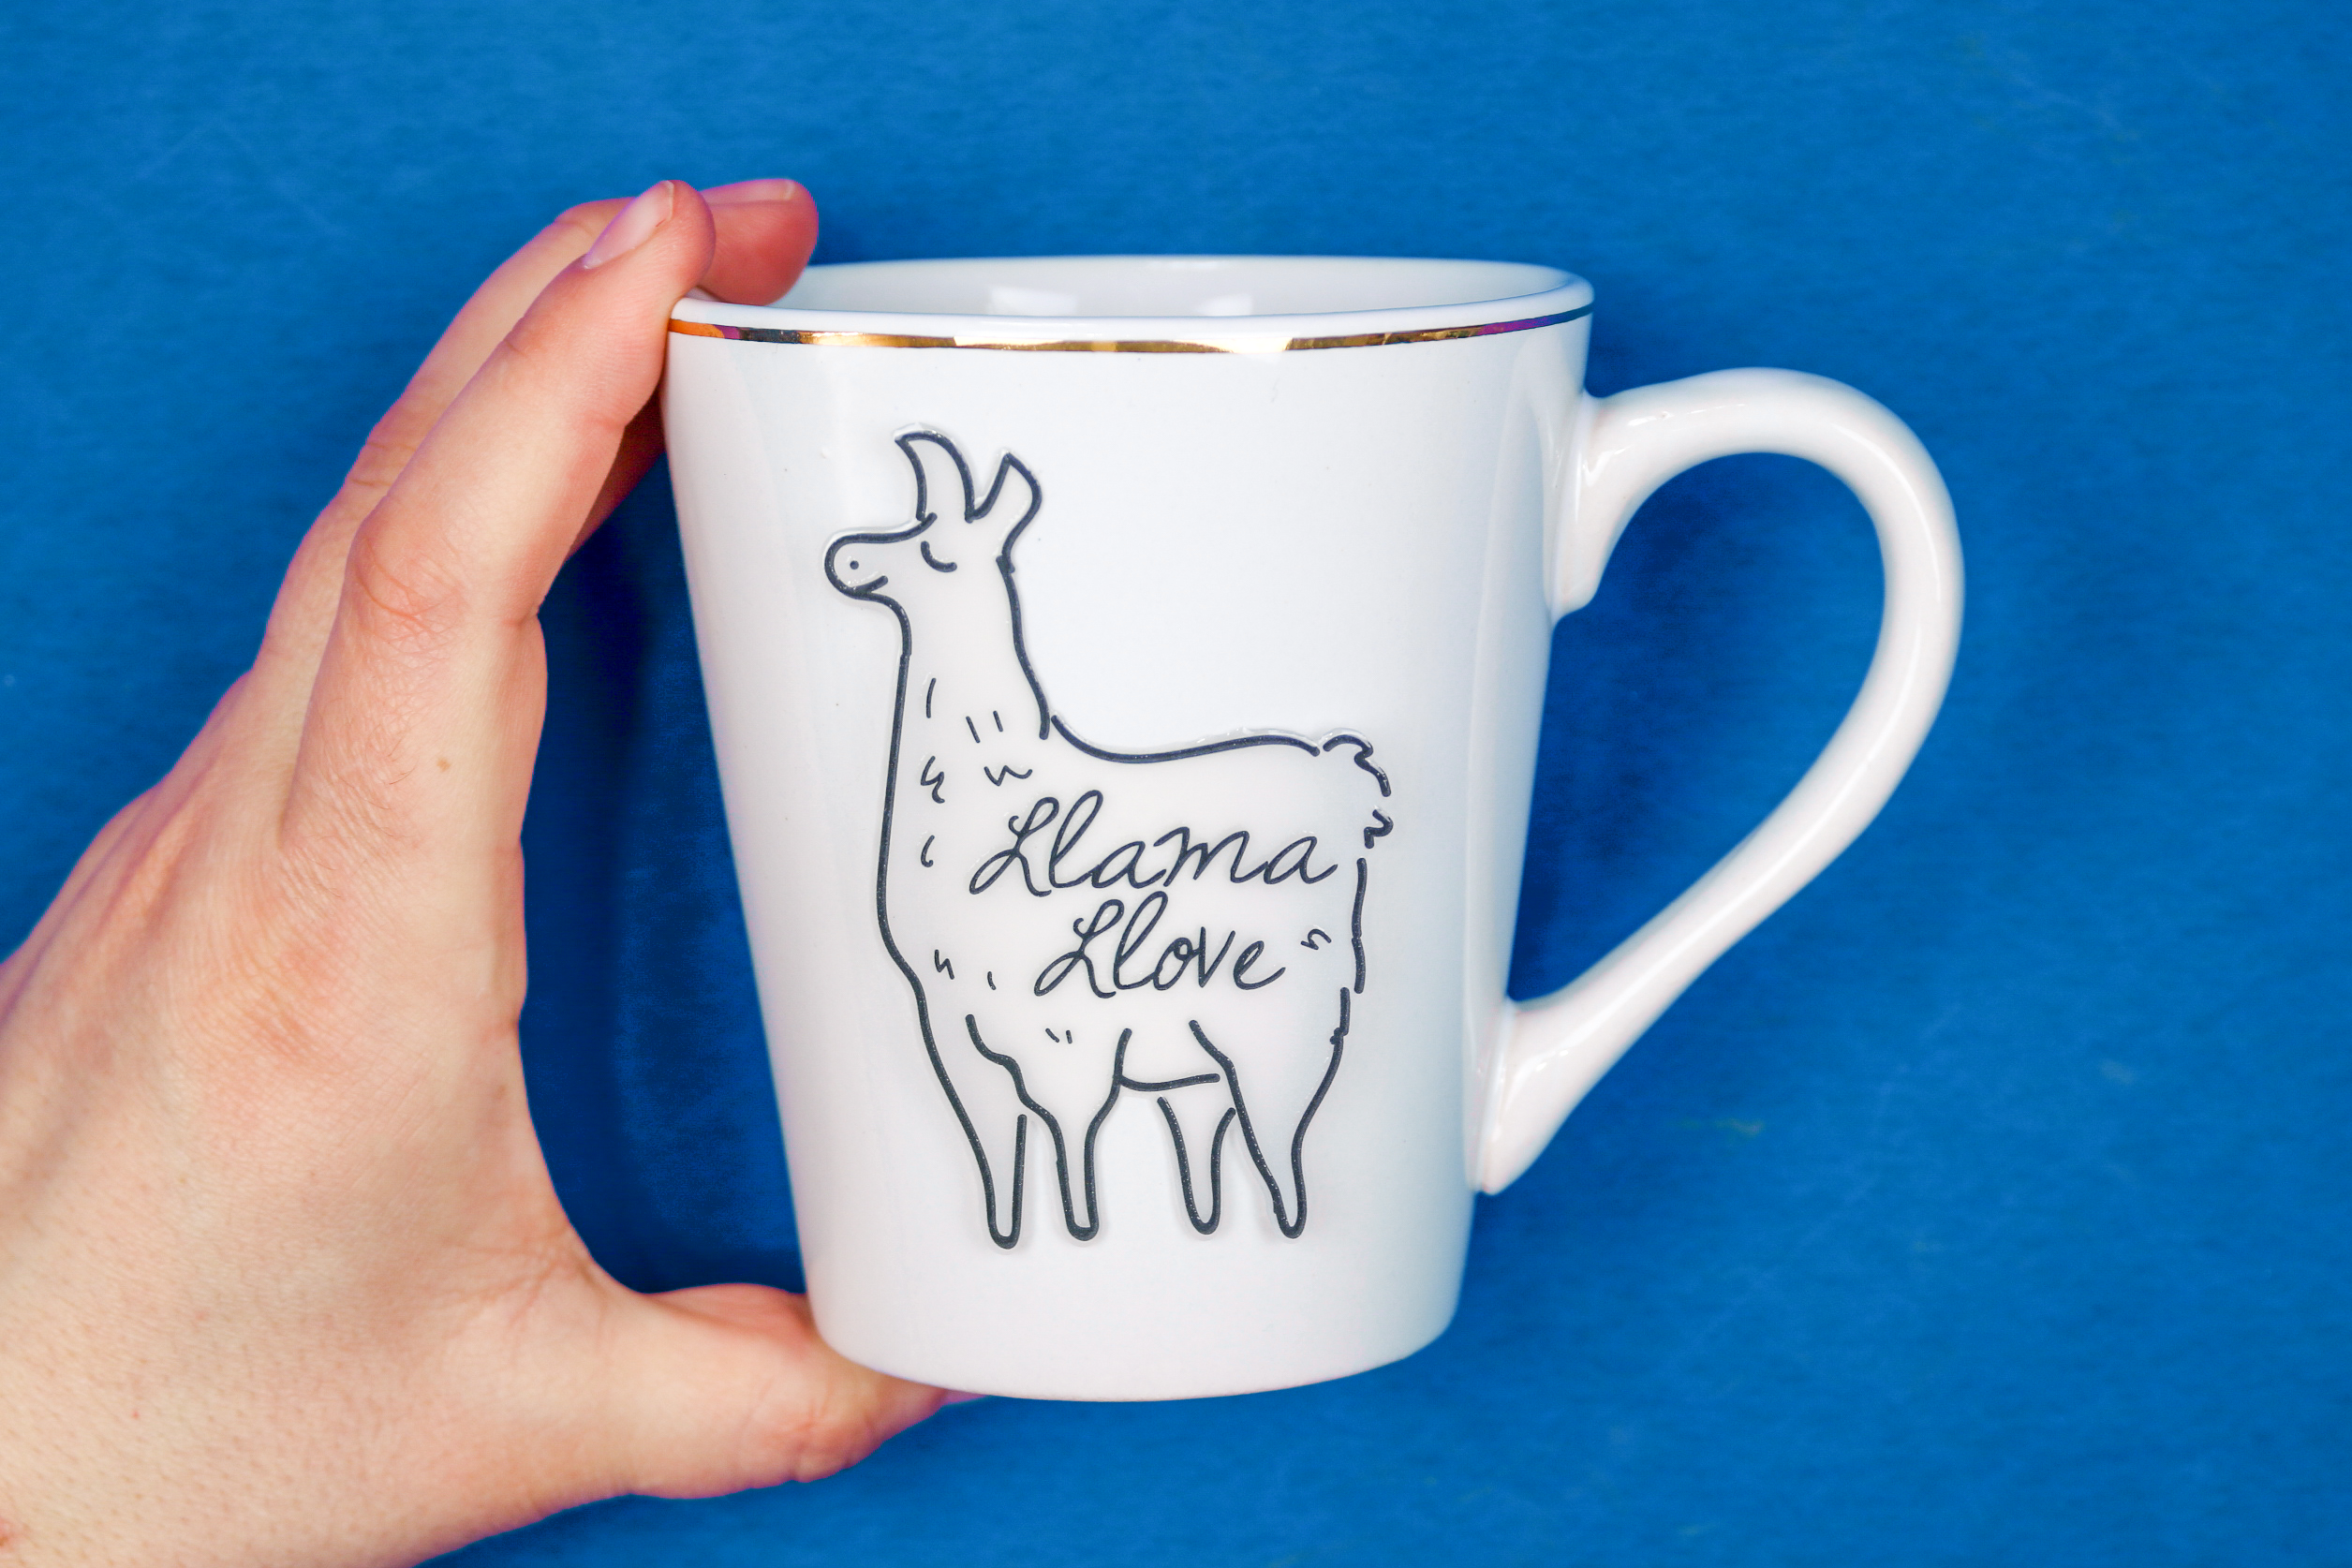 llama ceramic sticker applied to a white mug